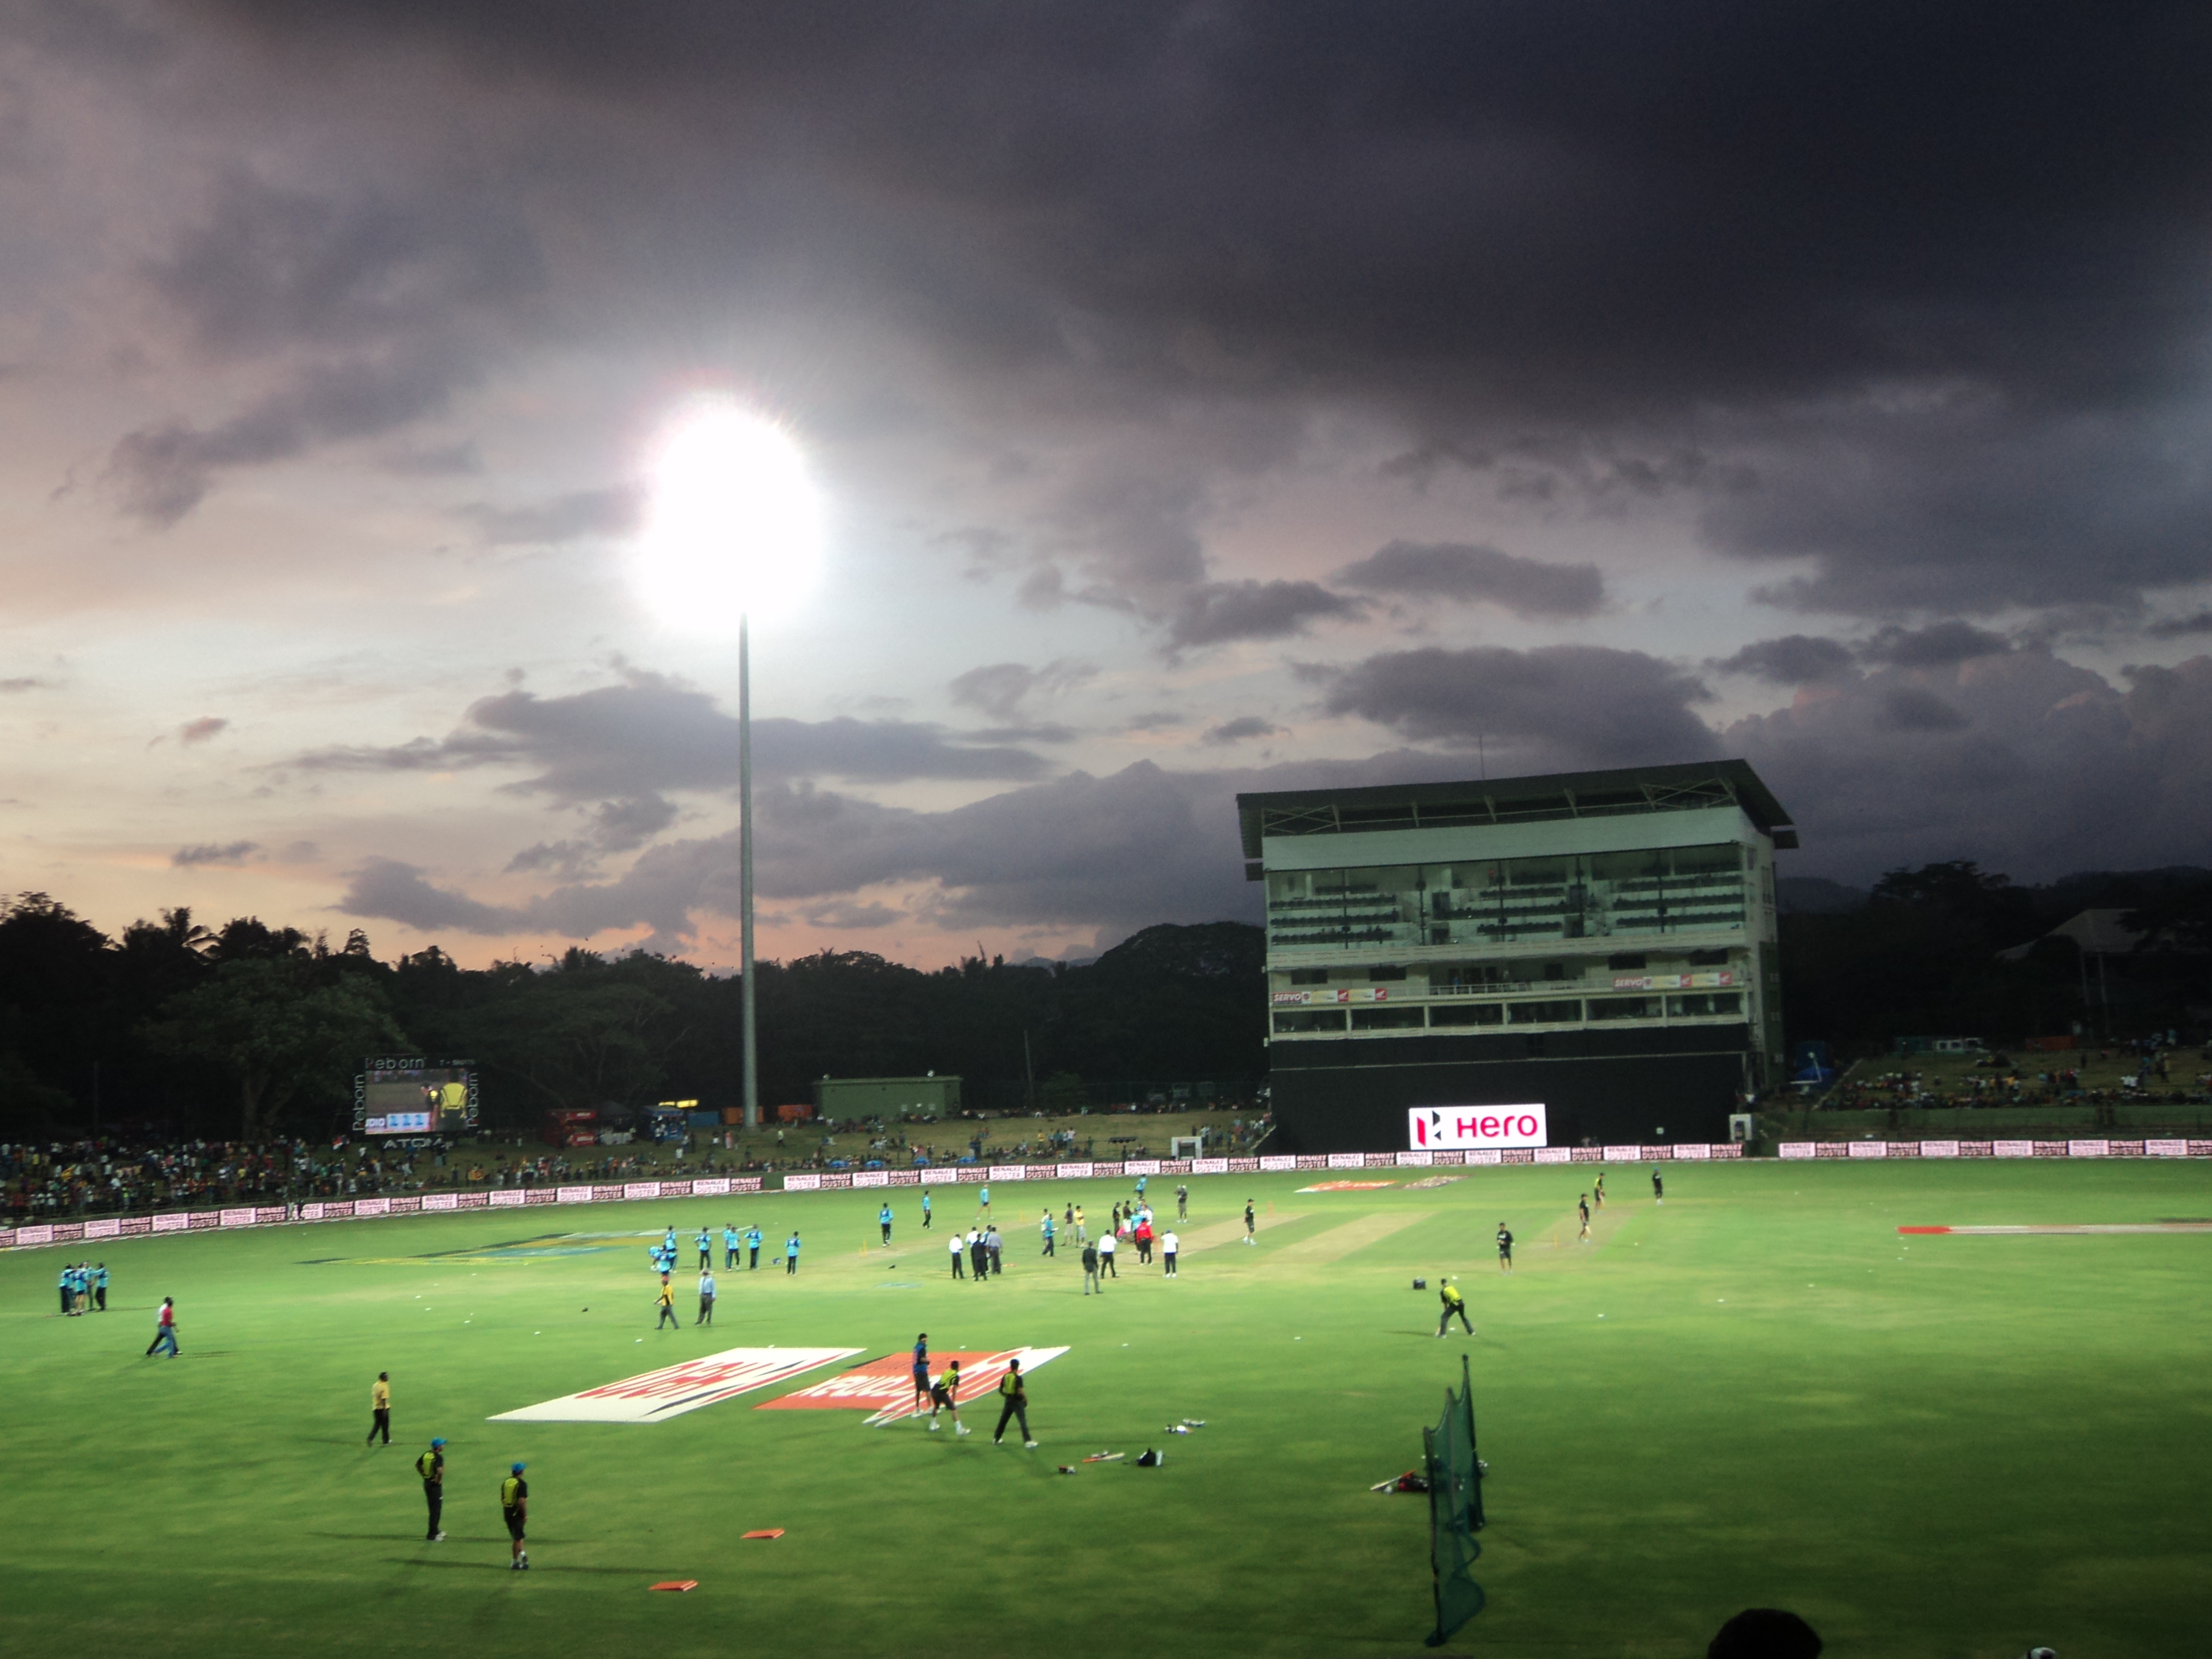 Pallekele International Cricket Stadium in Sri Lanka, Central Asia | Cricket - Rated 3.8